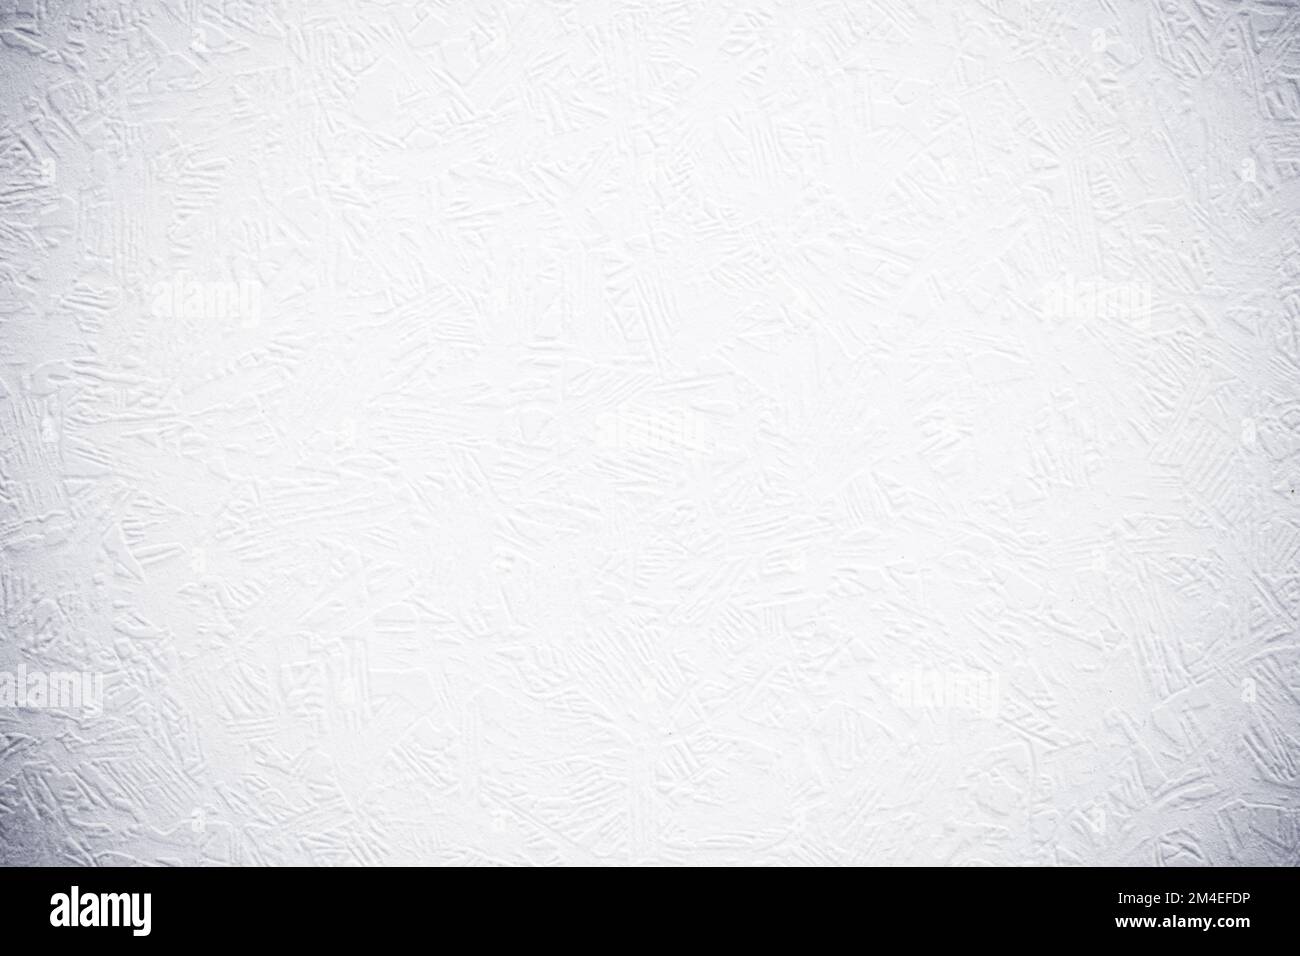 Embossed vinyl texture closeup texture background Stock Photo - Alamy